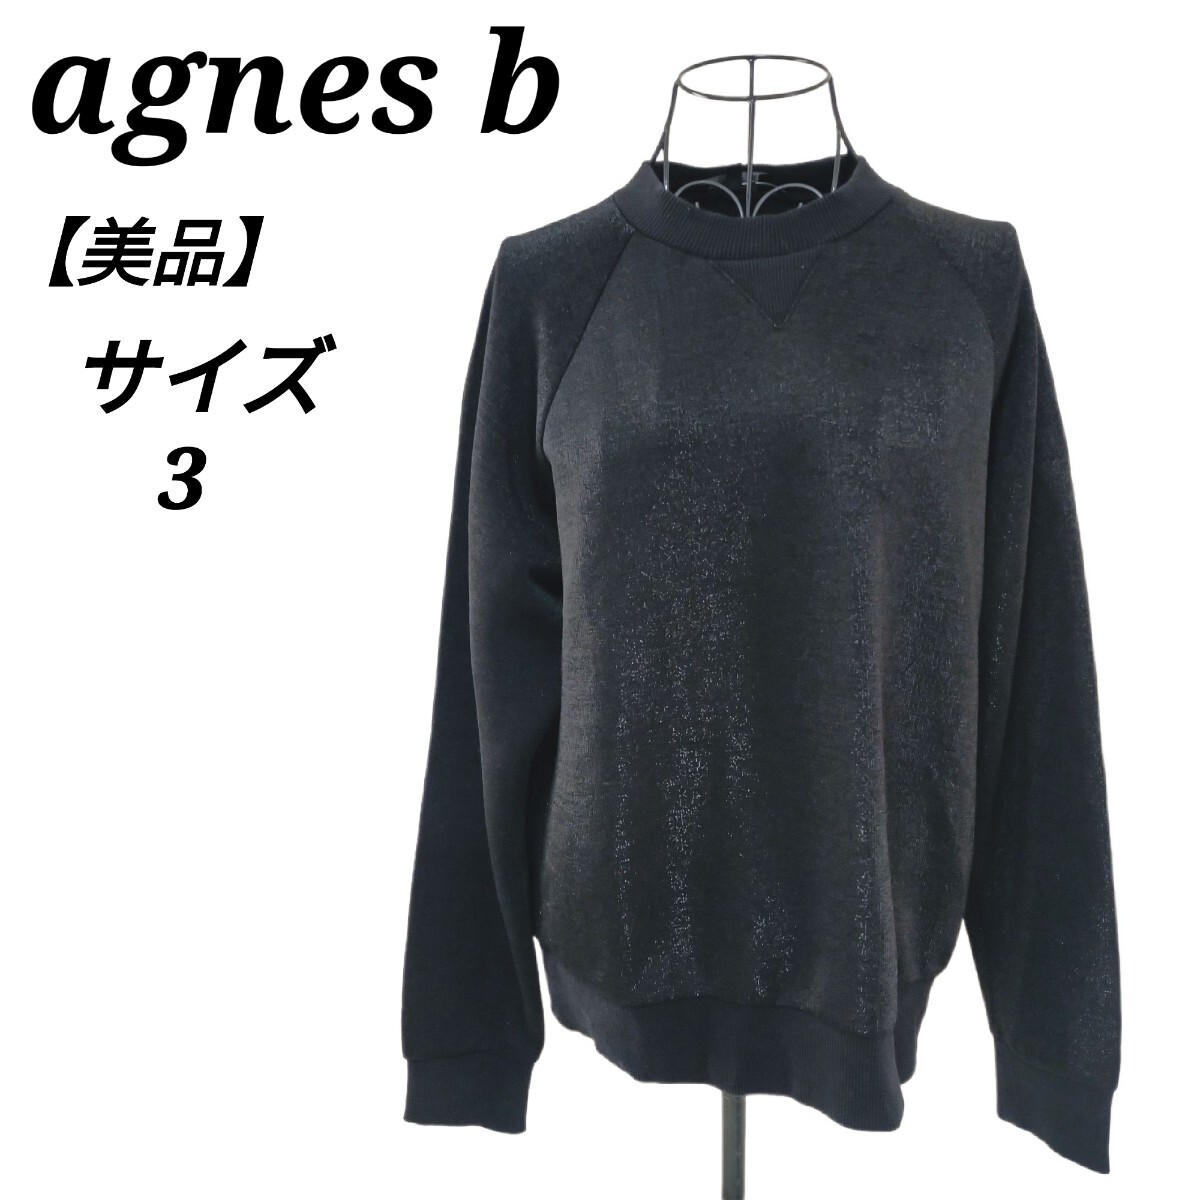  Agnes B agnes b beautiful goods black la gran sleeve sweat sweatshirt tops black color black 3 L corresponding lady's 